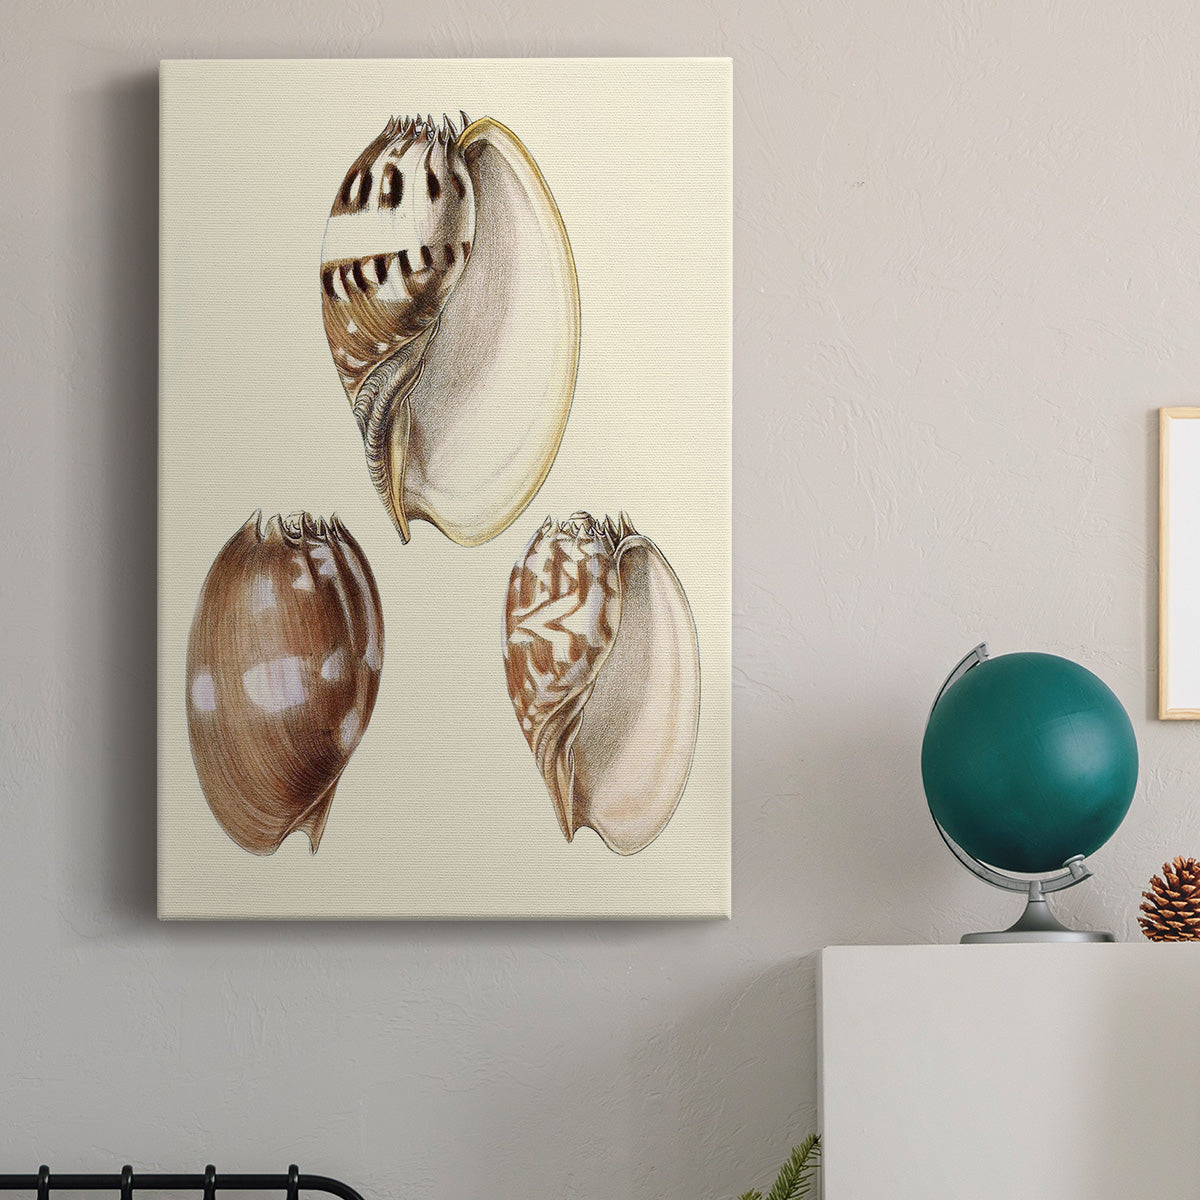 Splendid Shells VI Premium Gallery Wrapped Canvas - Ready to Hang